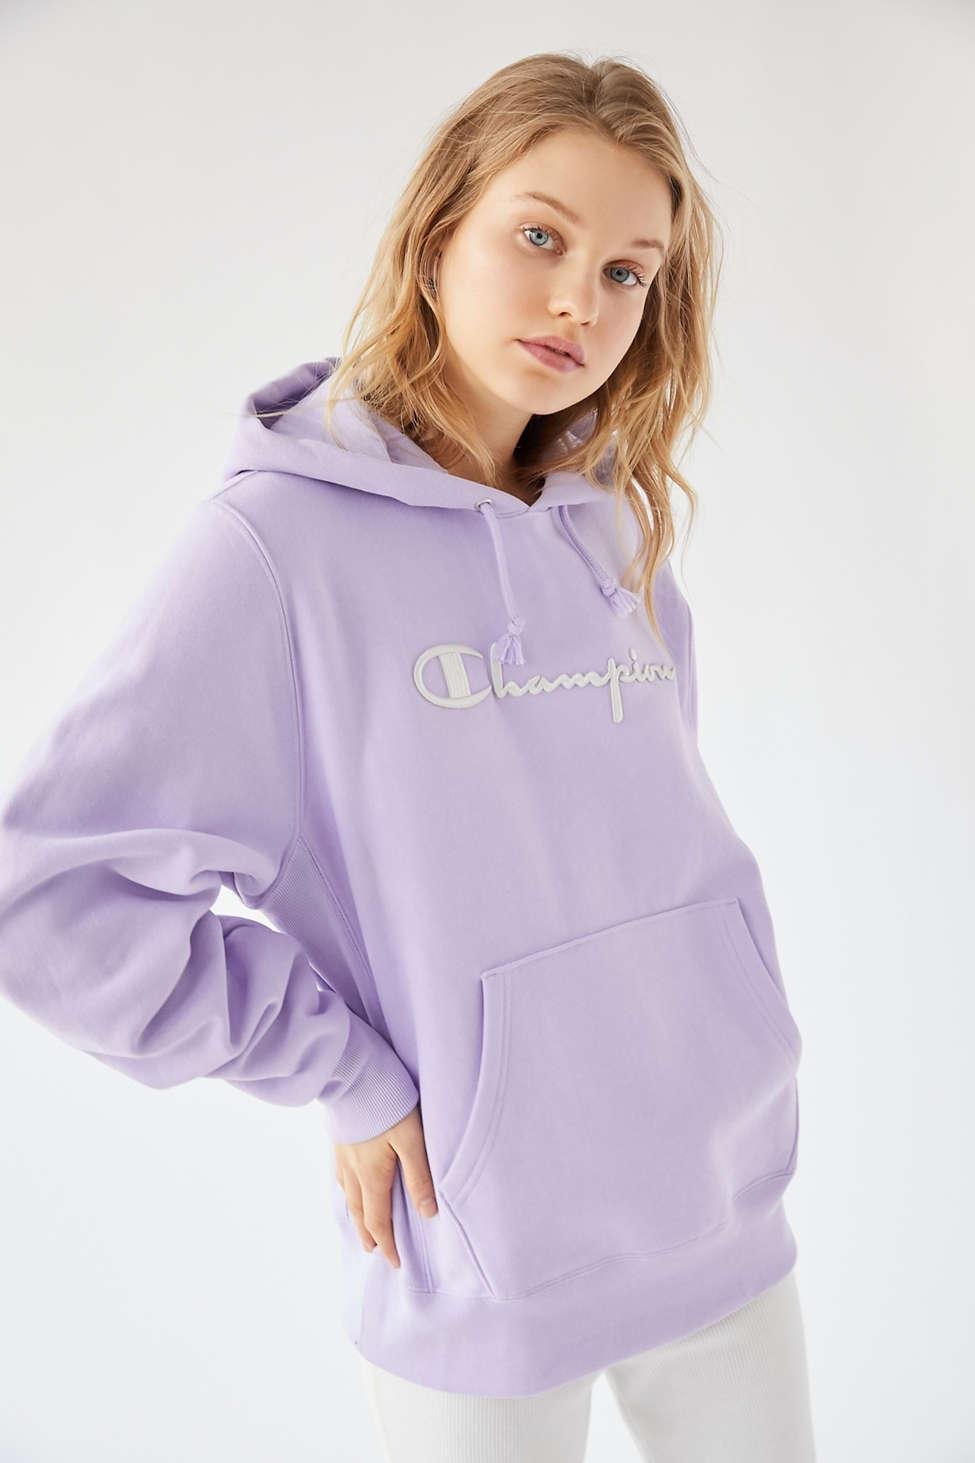 Cotton Uo Exclusive Reverse Weave Boyfriend Hoodie Sweatshirt in Purple - Lyst